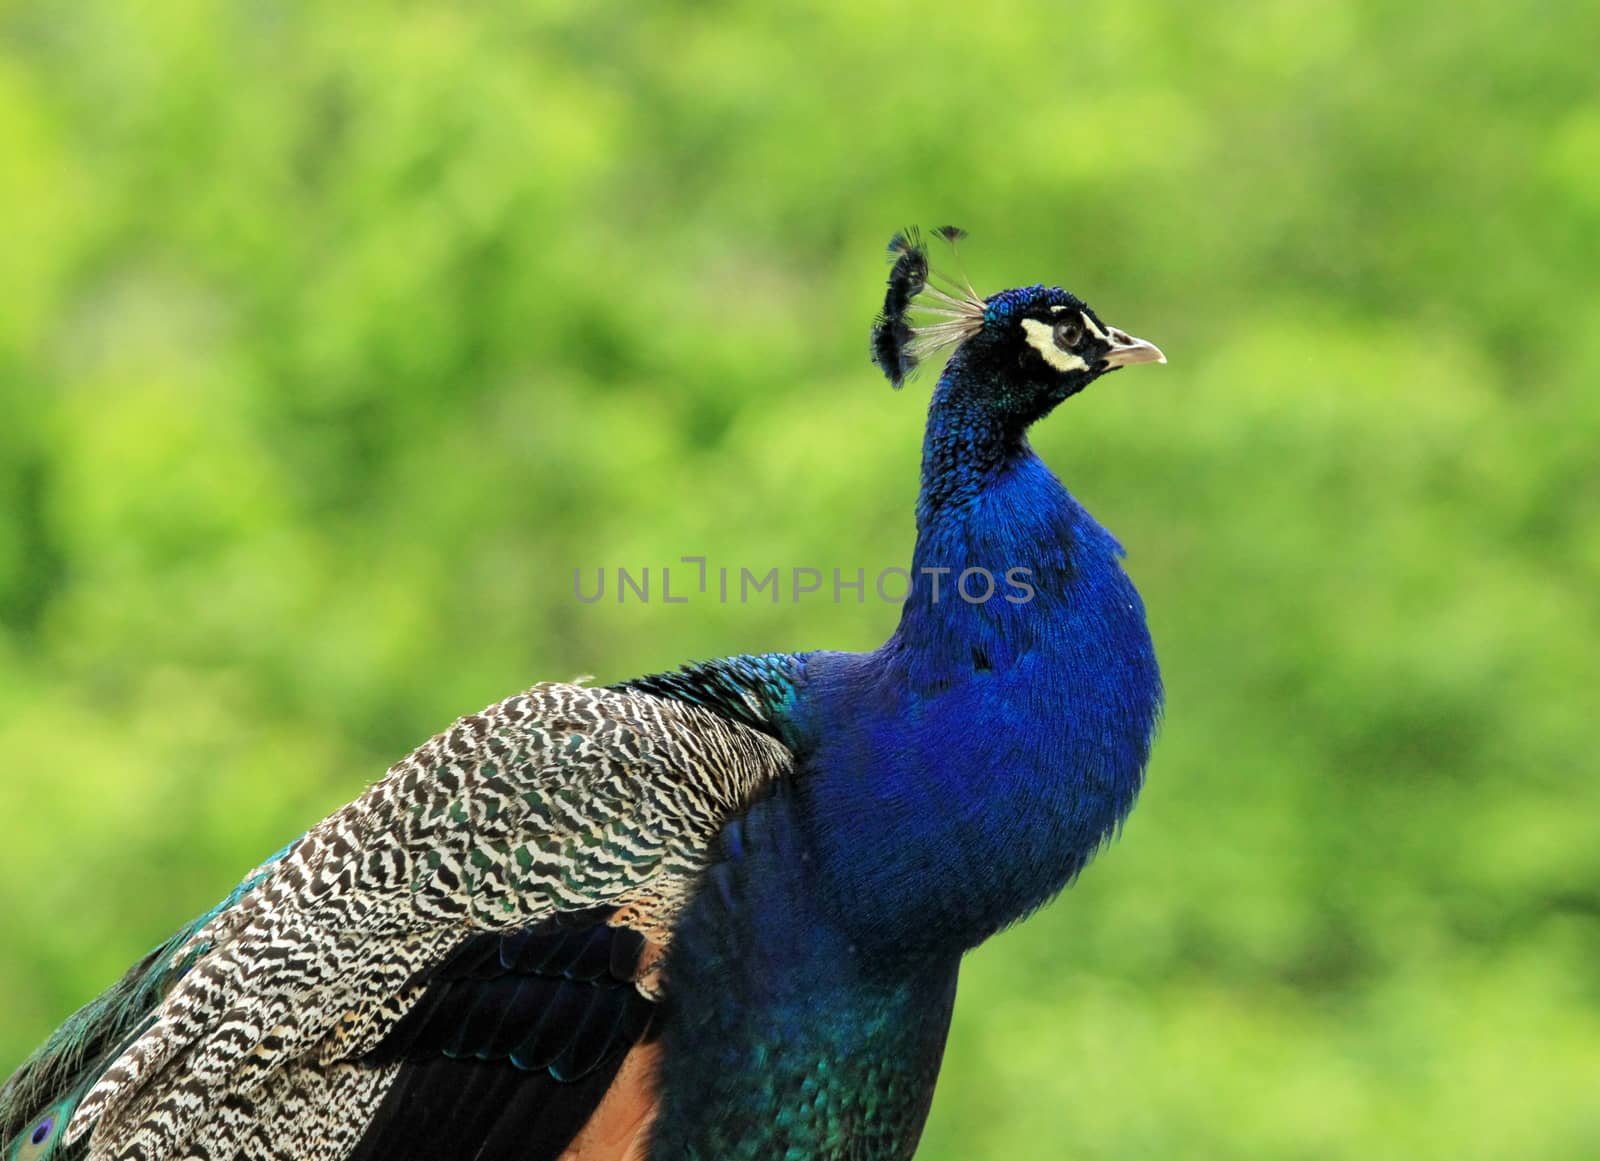 Peacock portrait by Elenaphotos21